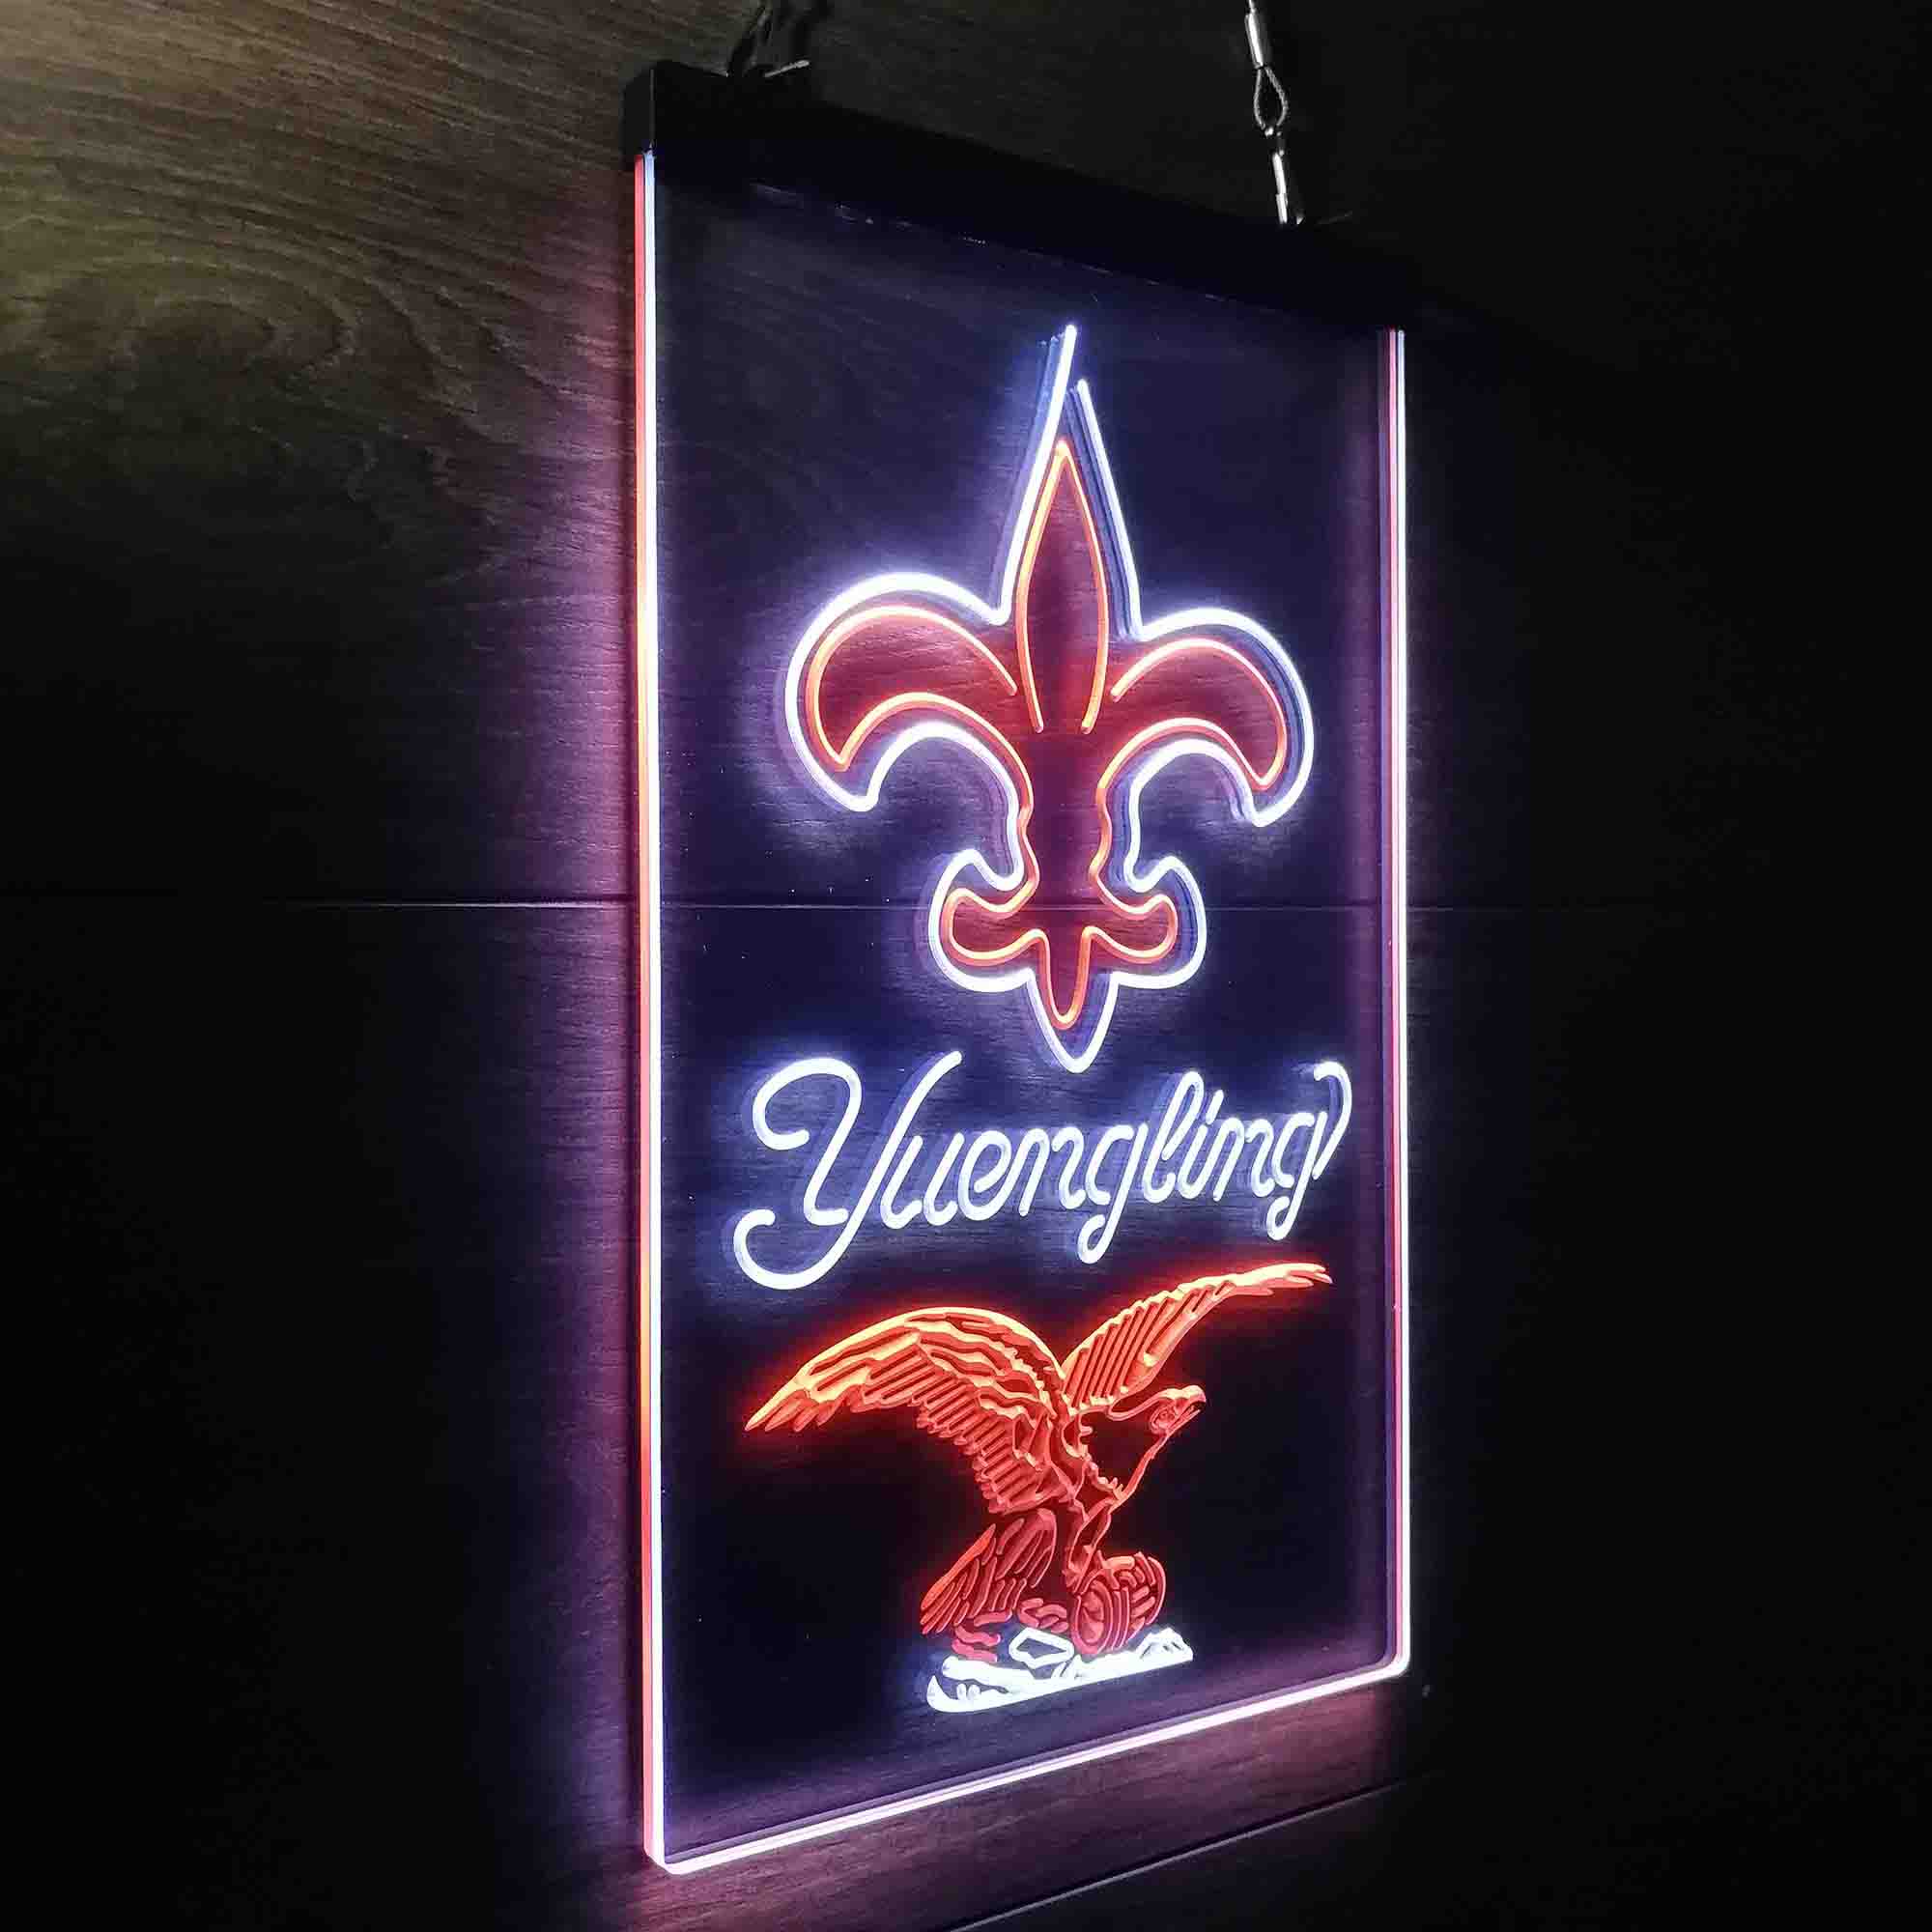 Yuengling Bar New Orleans Saints Est. 1967 LED Neon Sign